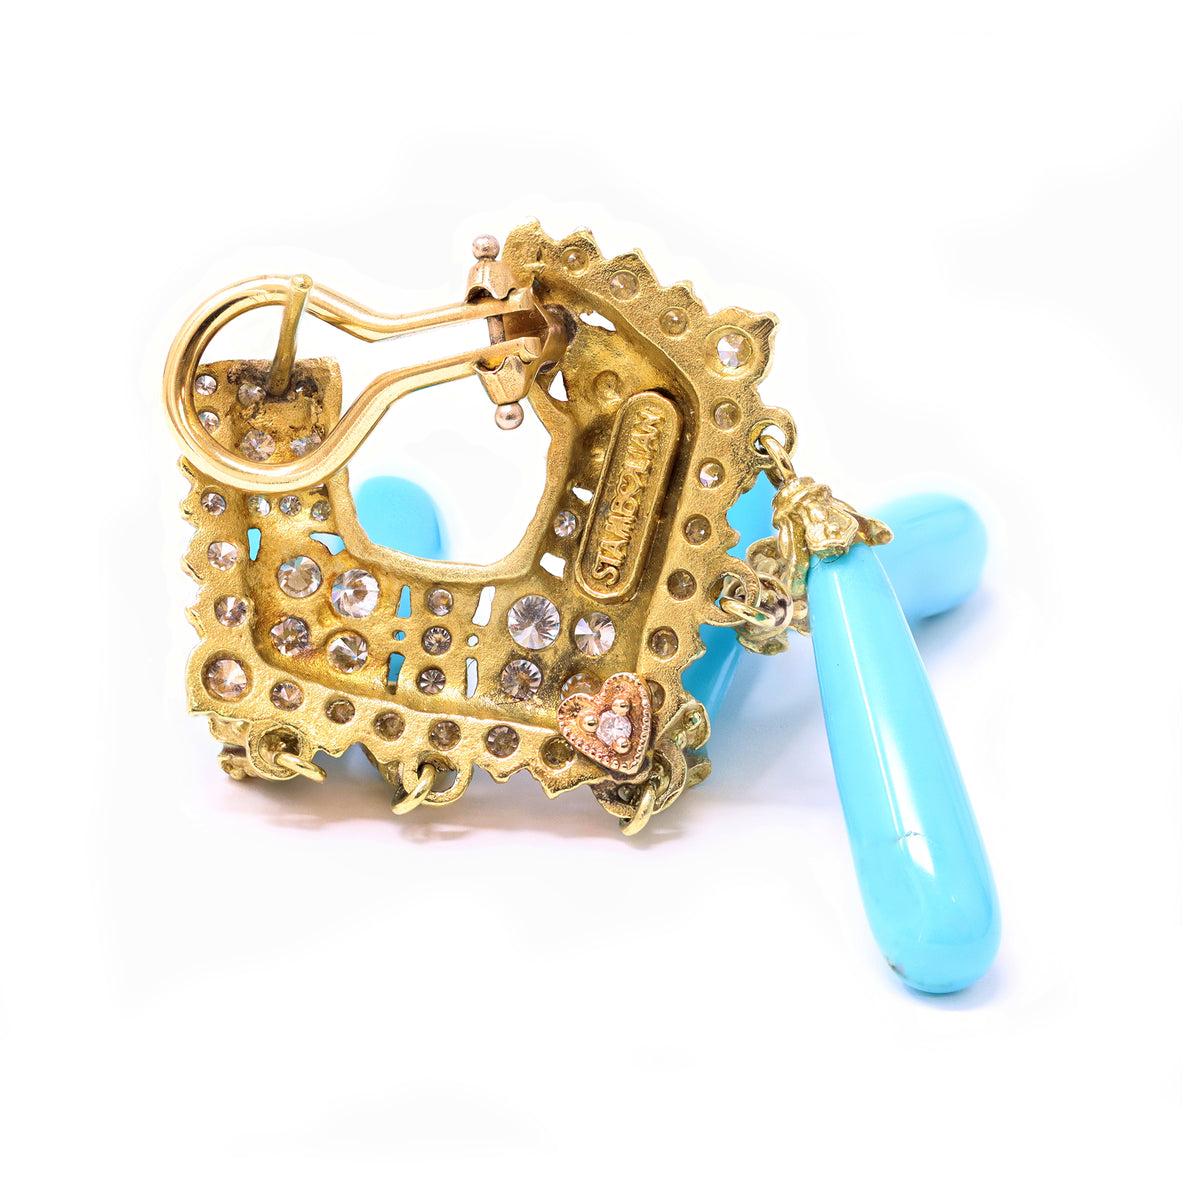 Stambolian Turquoise and Diamond Chandelier Earrings in 18 Karat Yellow Gold